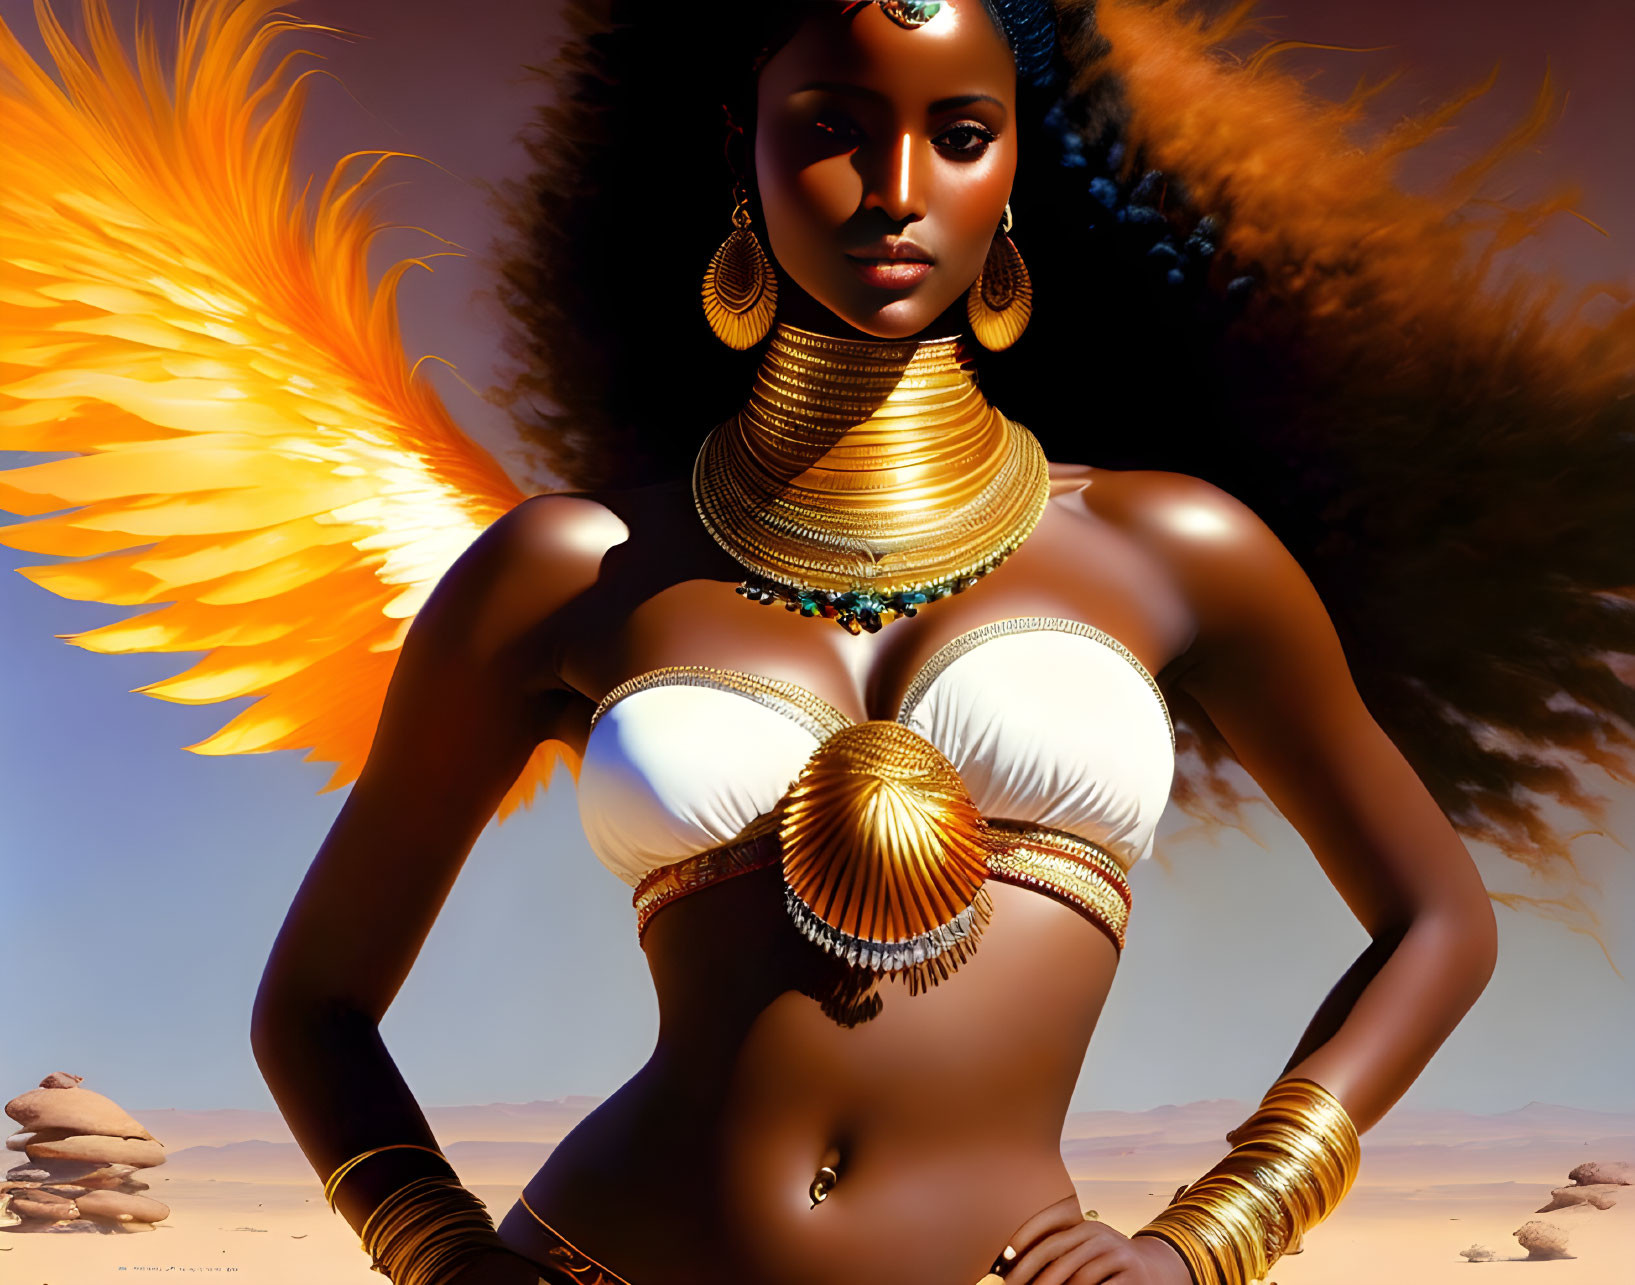 Digital Artwork: Dark-skinned Woman in Gold Jewelry, White Attire, and Fiery Wings